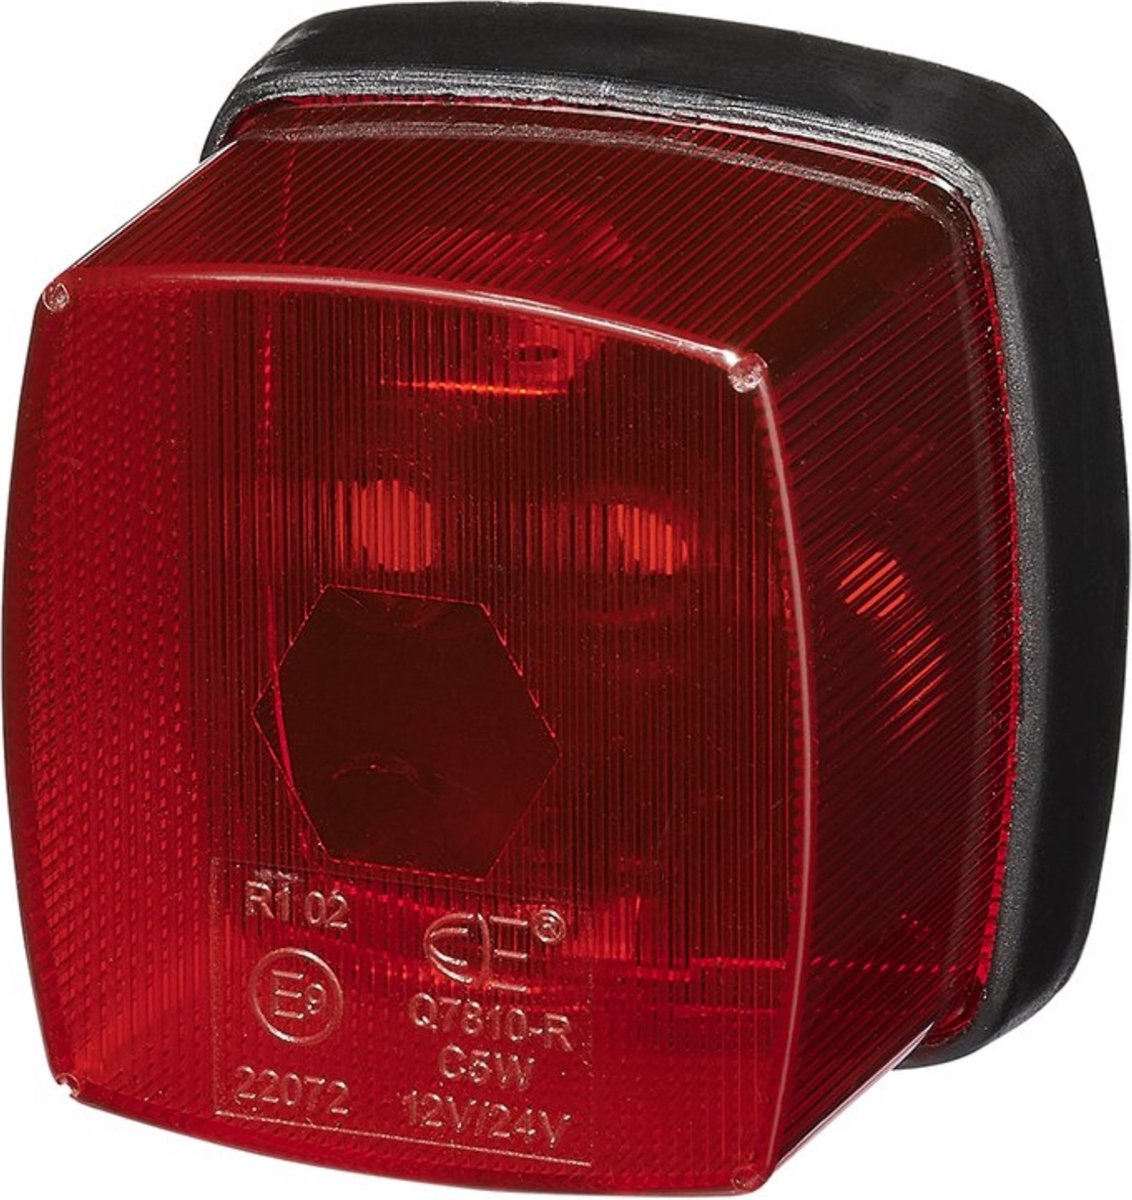 Pro Plus Markeringslamp - Zijlamp - Contourverlichting - Rood - 65 x 60 mm - Budget